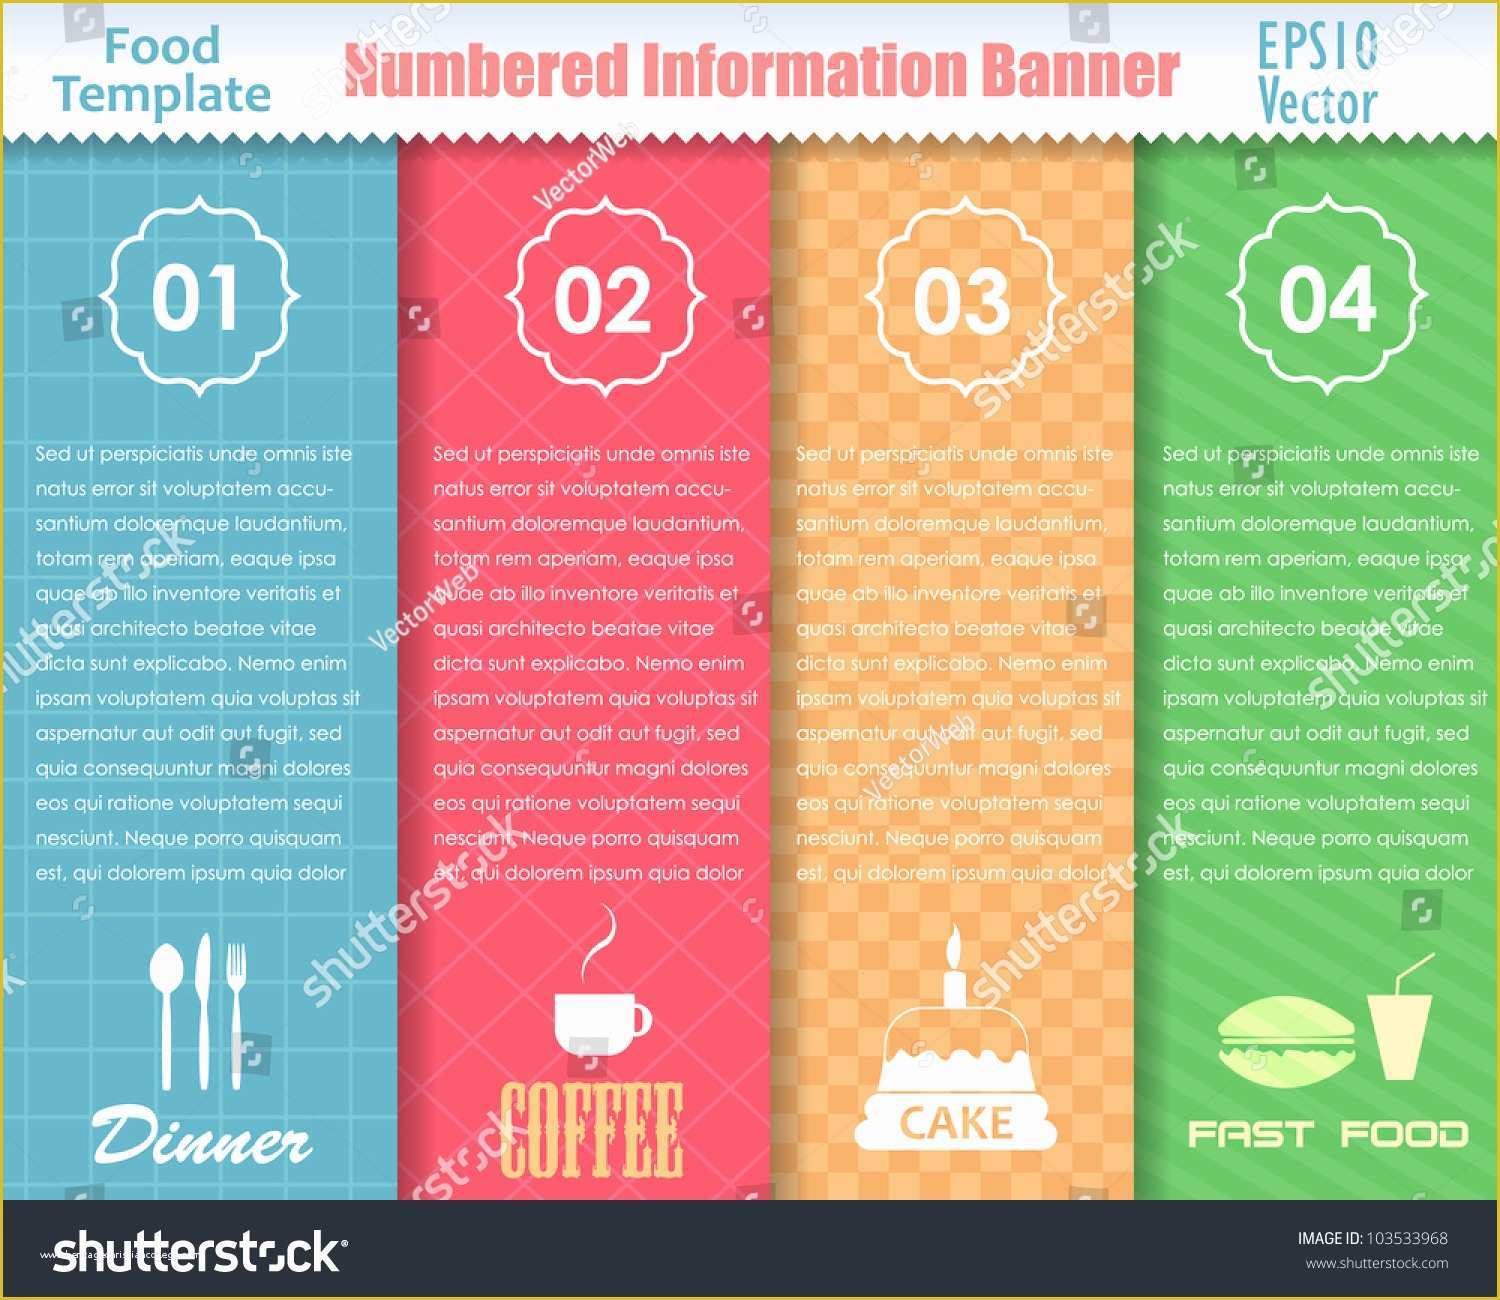 Food Banner Design Template Free Of Numbered Information Food Template Banner Vintage Stock